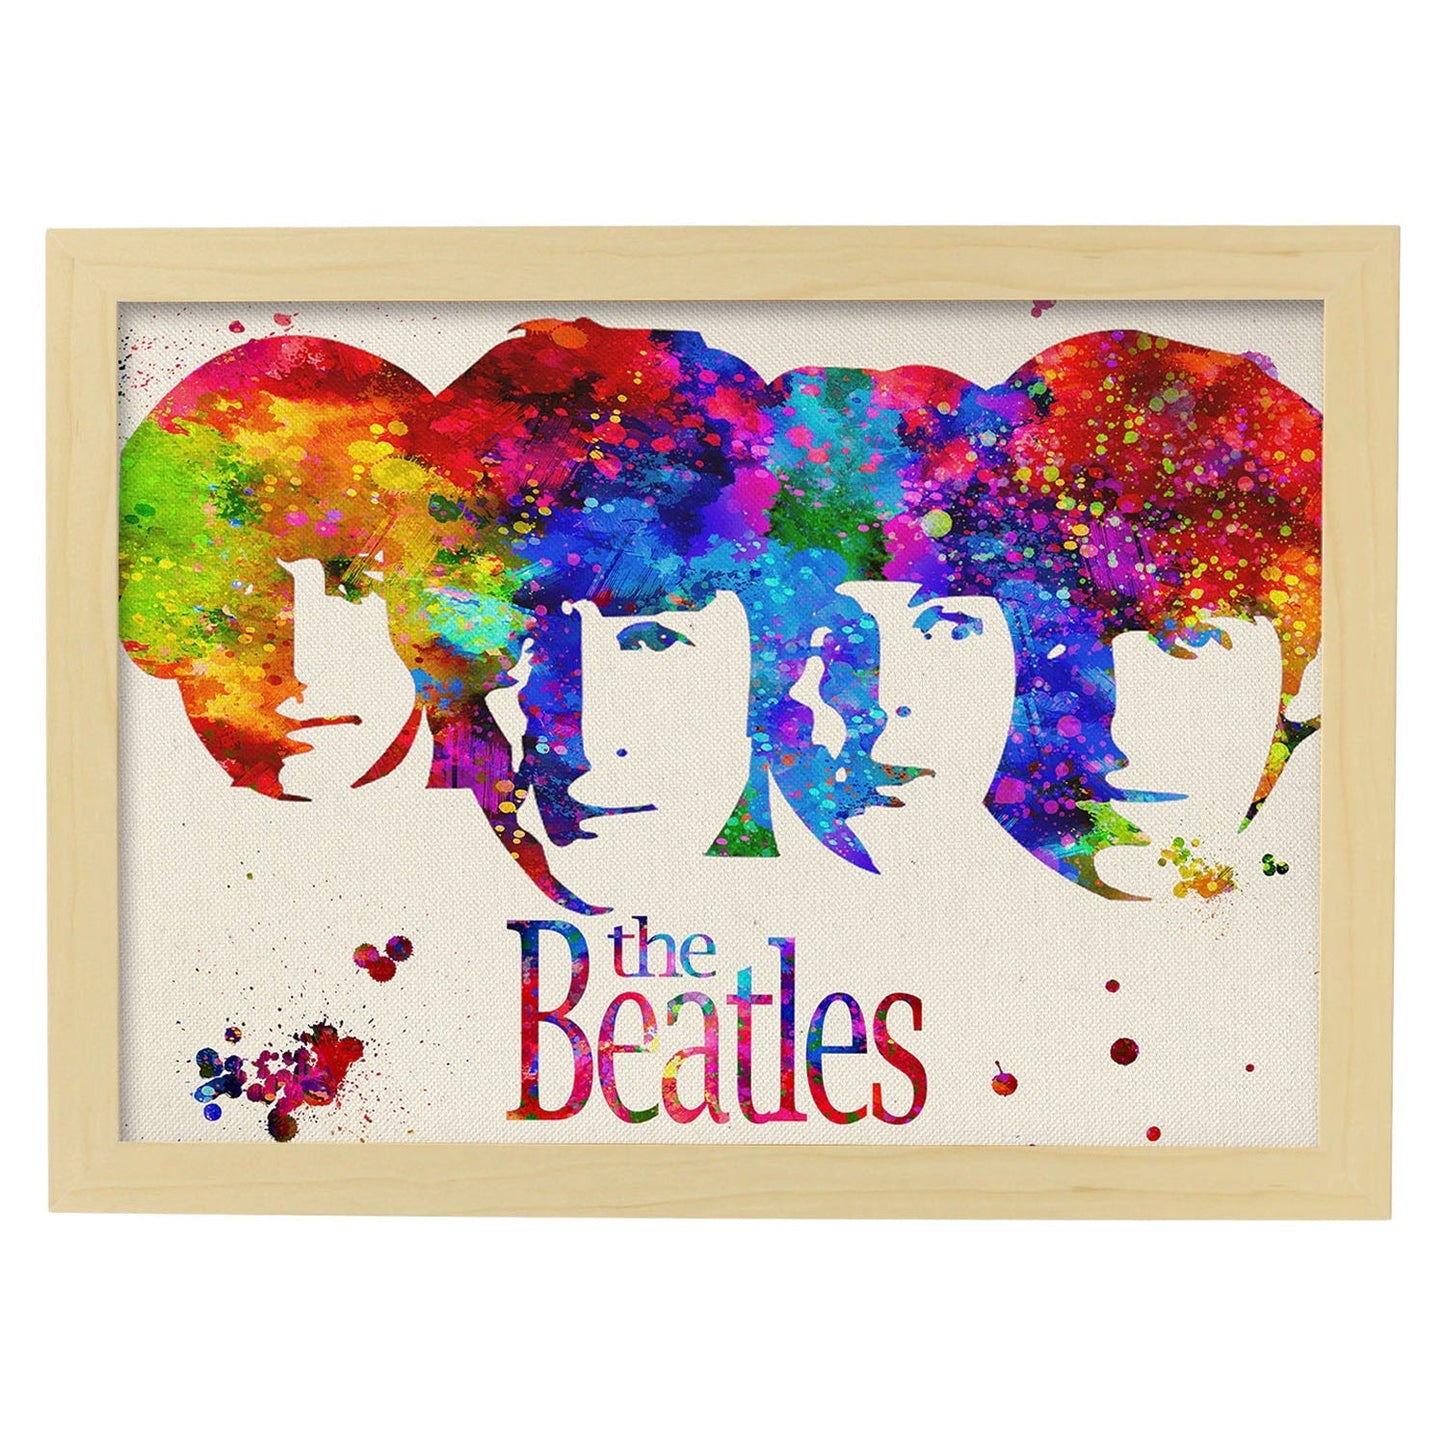 Lámina de la banda de música The Beatles (caras) en Poster estilo explosión de color . Papel 250 gr alta calidad.-Artwork-Nacnic-A4-Marco Madera clara-Nacnic Estudio SL